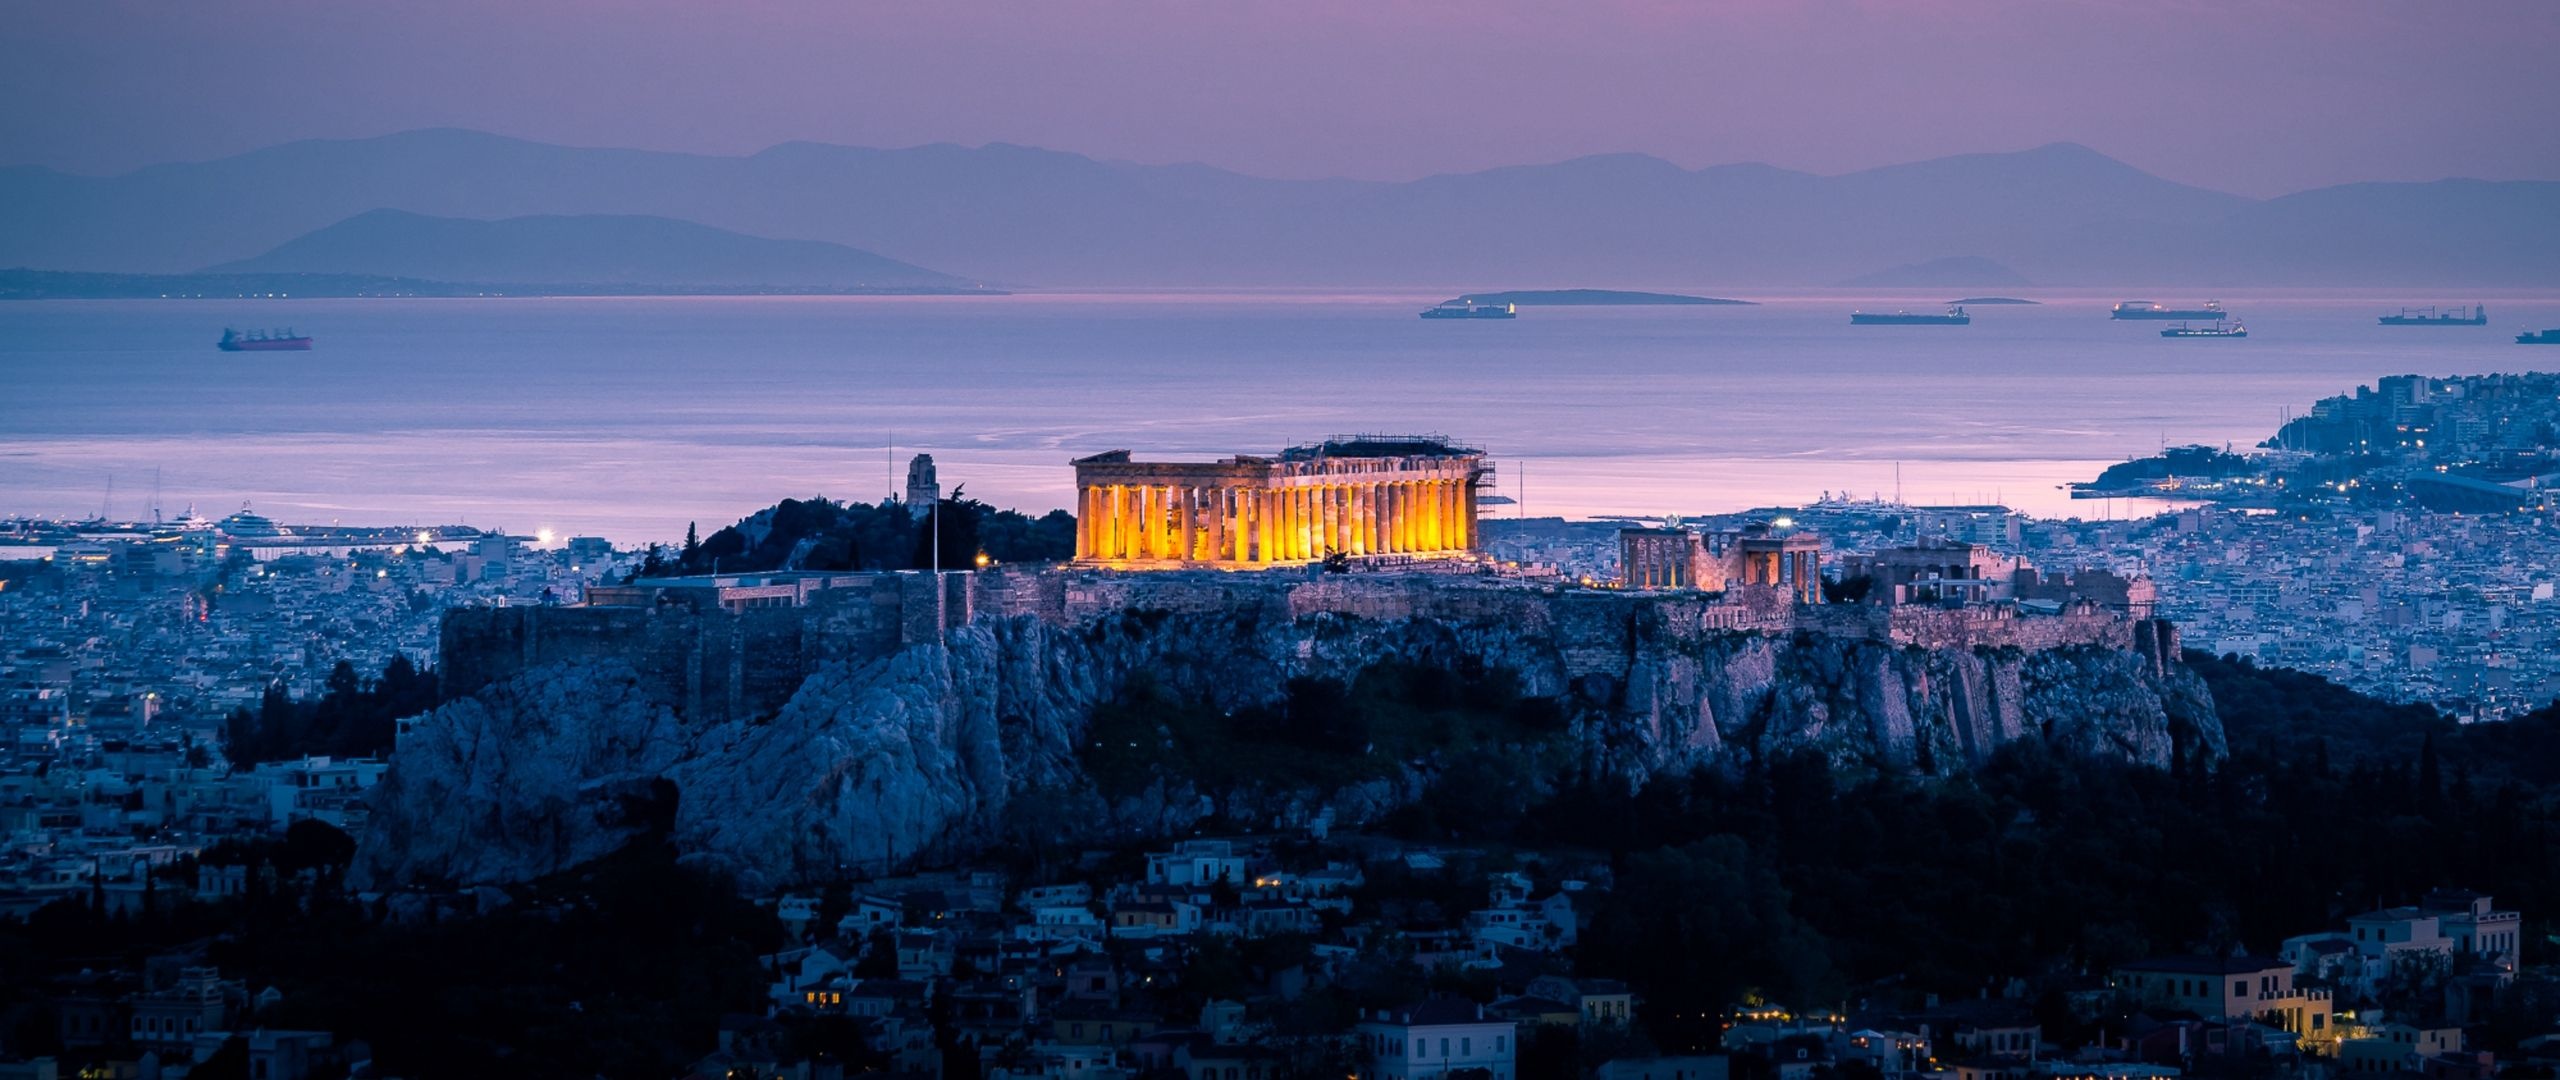 Top Athens wallpapers, Popular choices, High-quality images, Stunning city photos, 2560x1080 Dual Screen Desktop